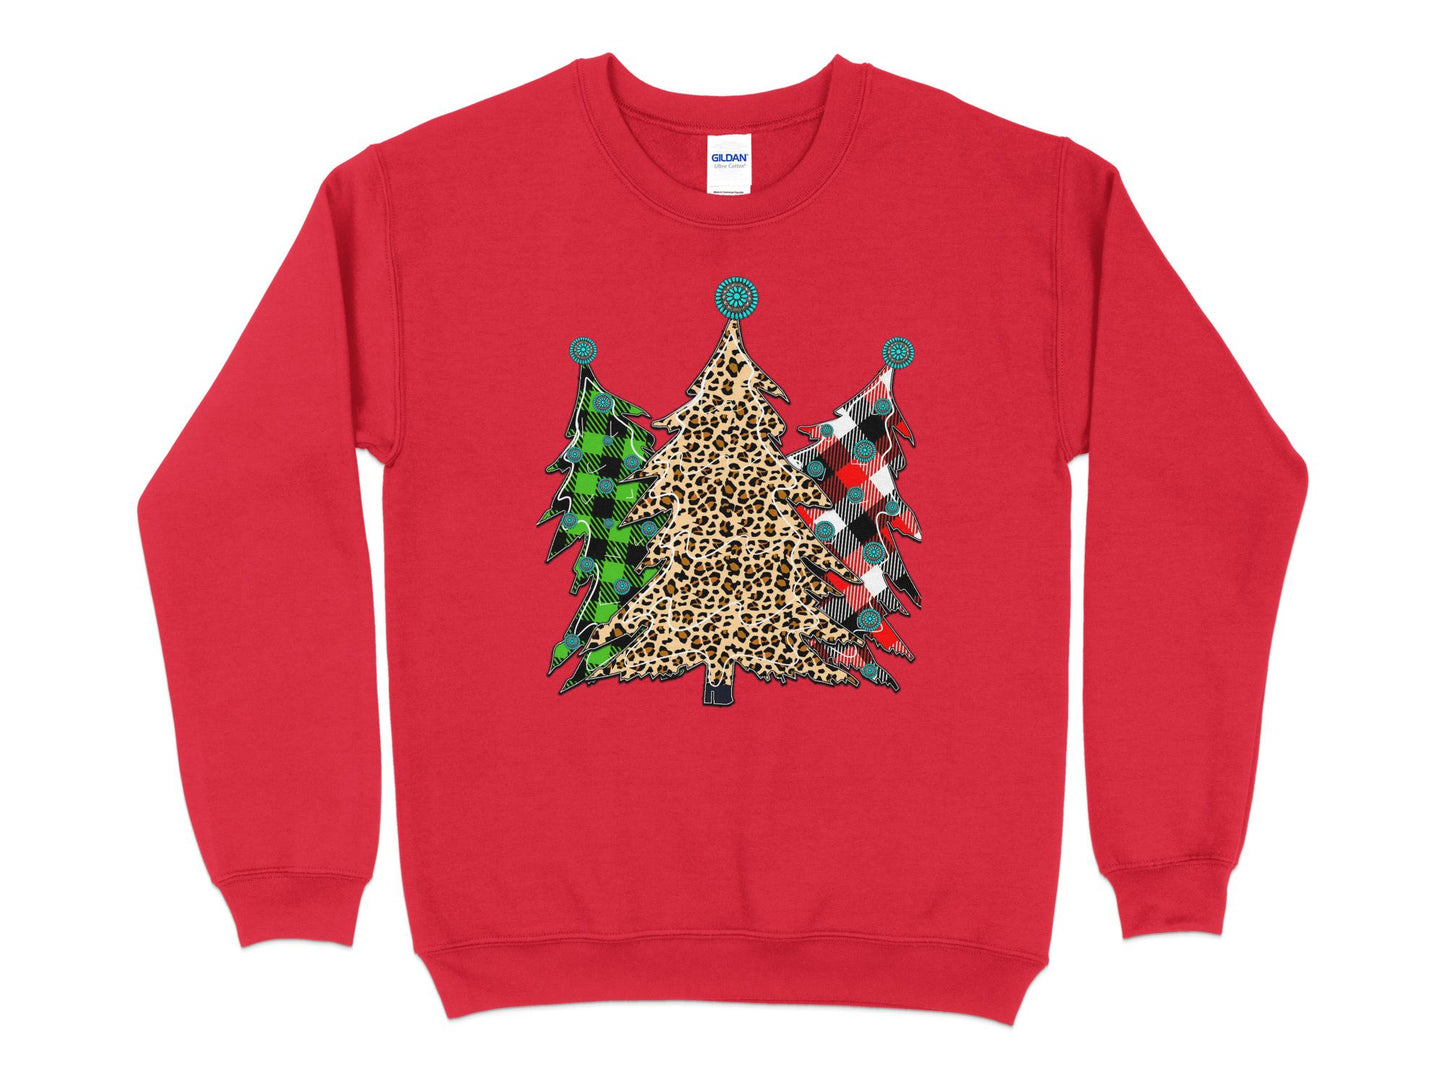 Christmas Tree Leopard Plaid Sweatshirt, Womens Cute Christmas Sweater, Christmas Holiday Party Pullover, Leopard Print Crewneck Knit - Mardonyx Sweatshirt S / Red